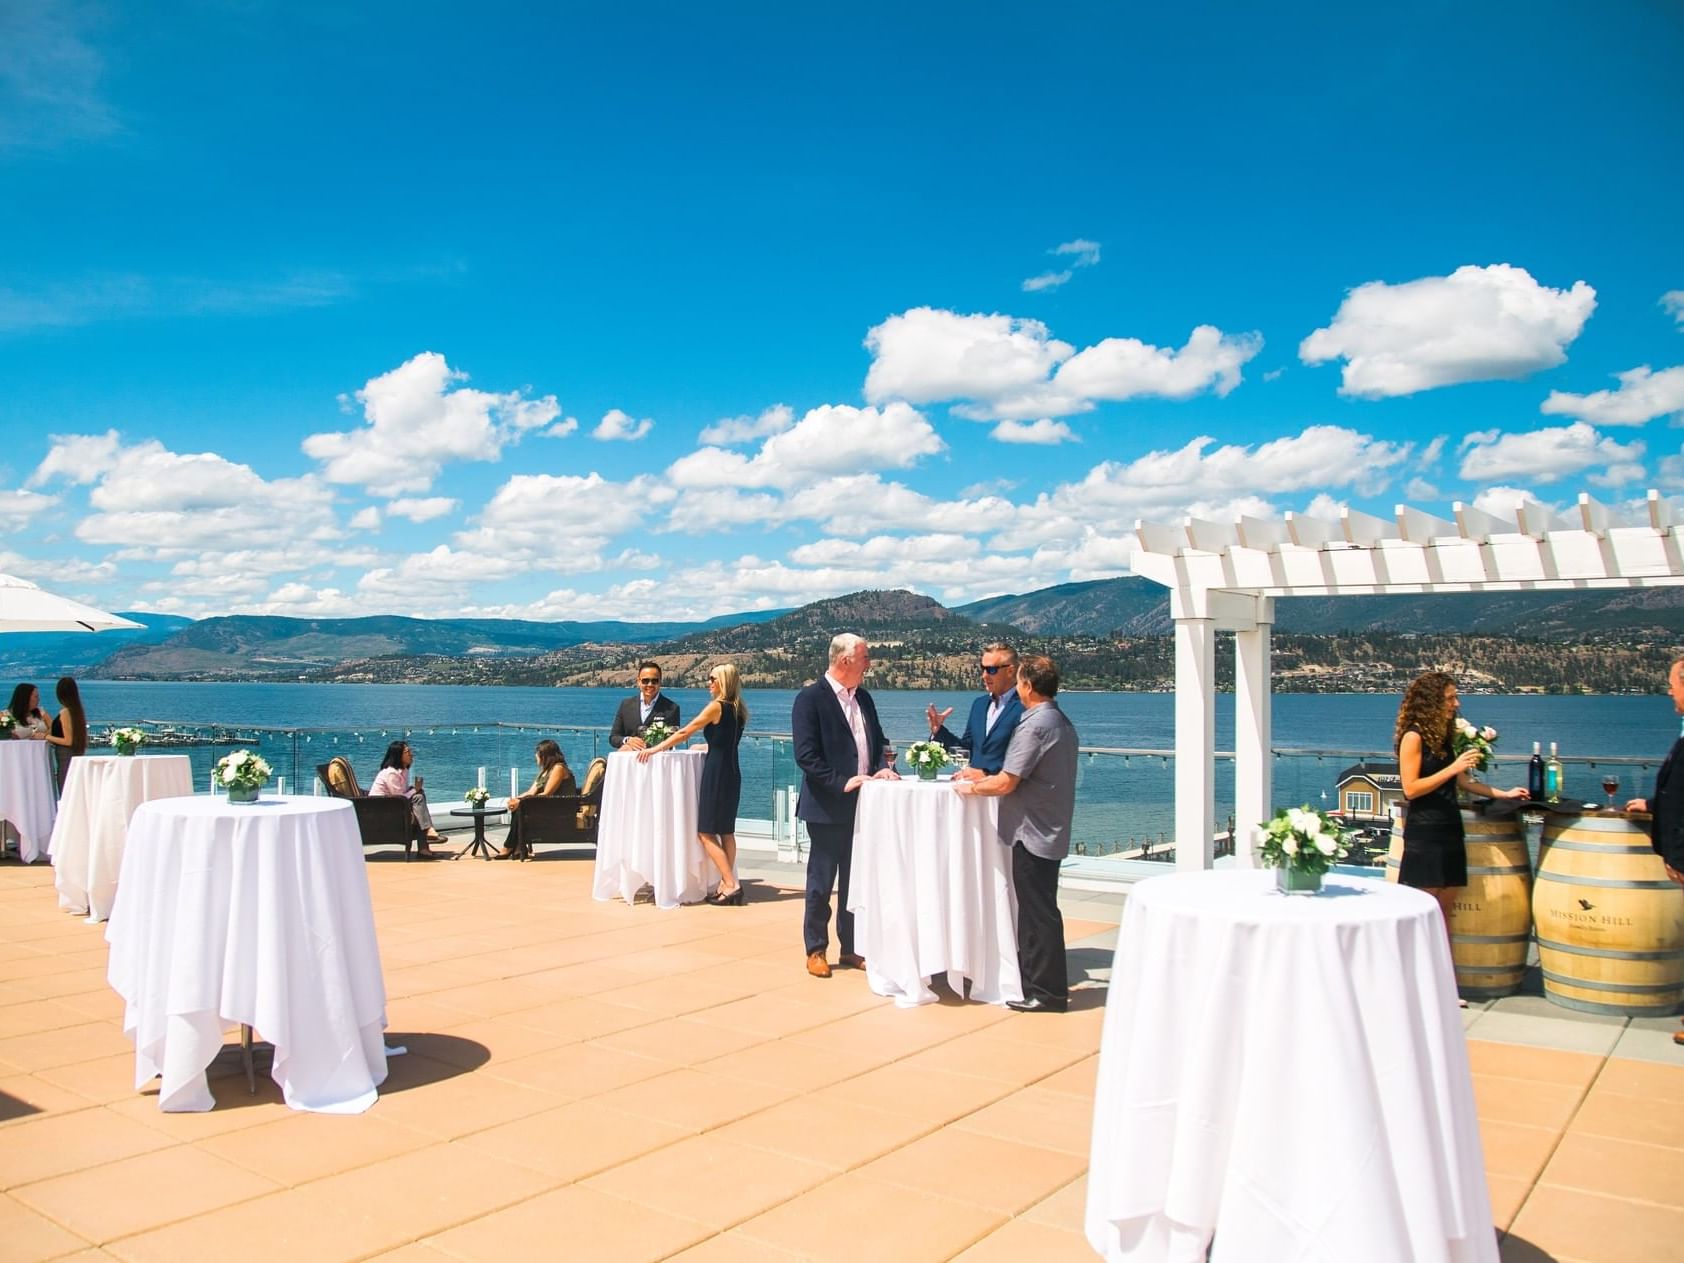 Wedding reception arrangements in the Sun Roof at Manteo Resort